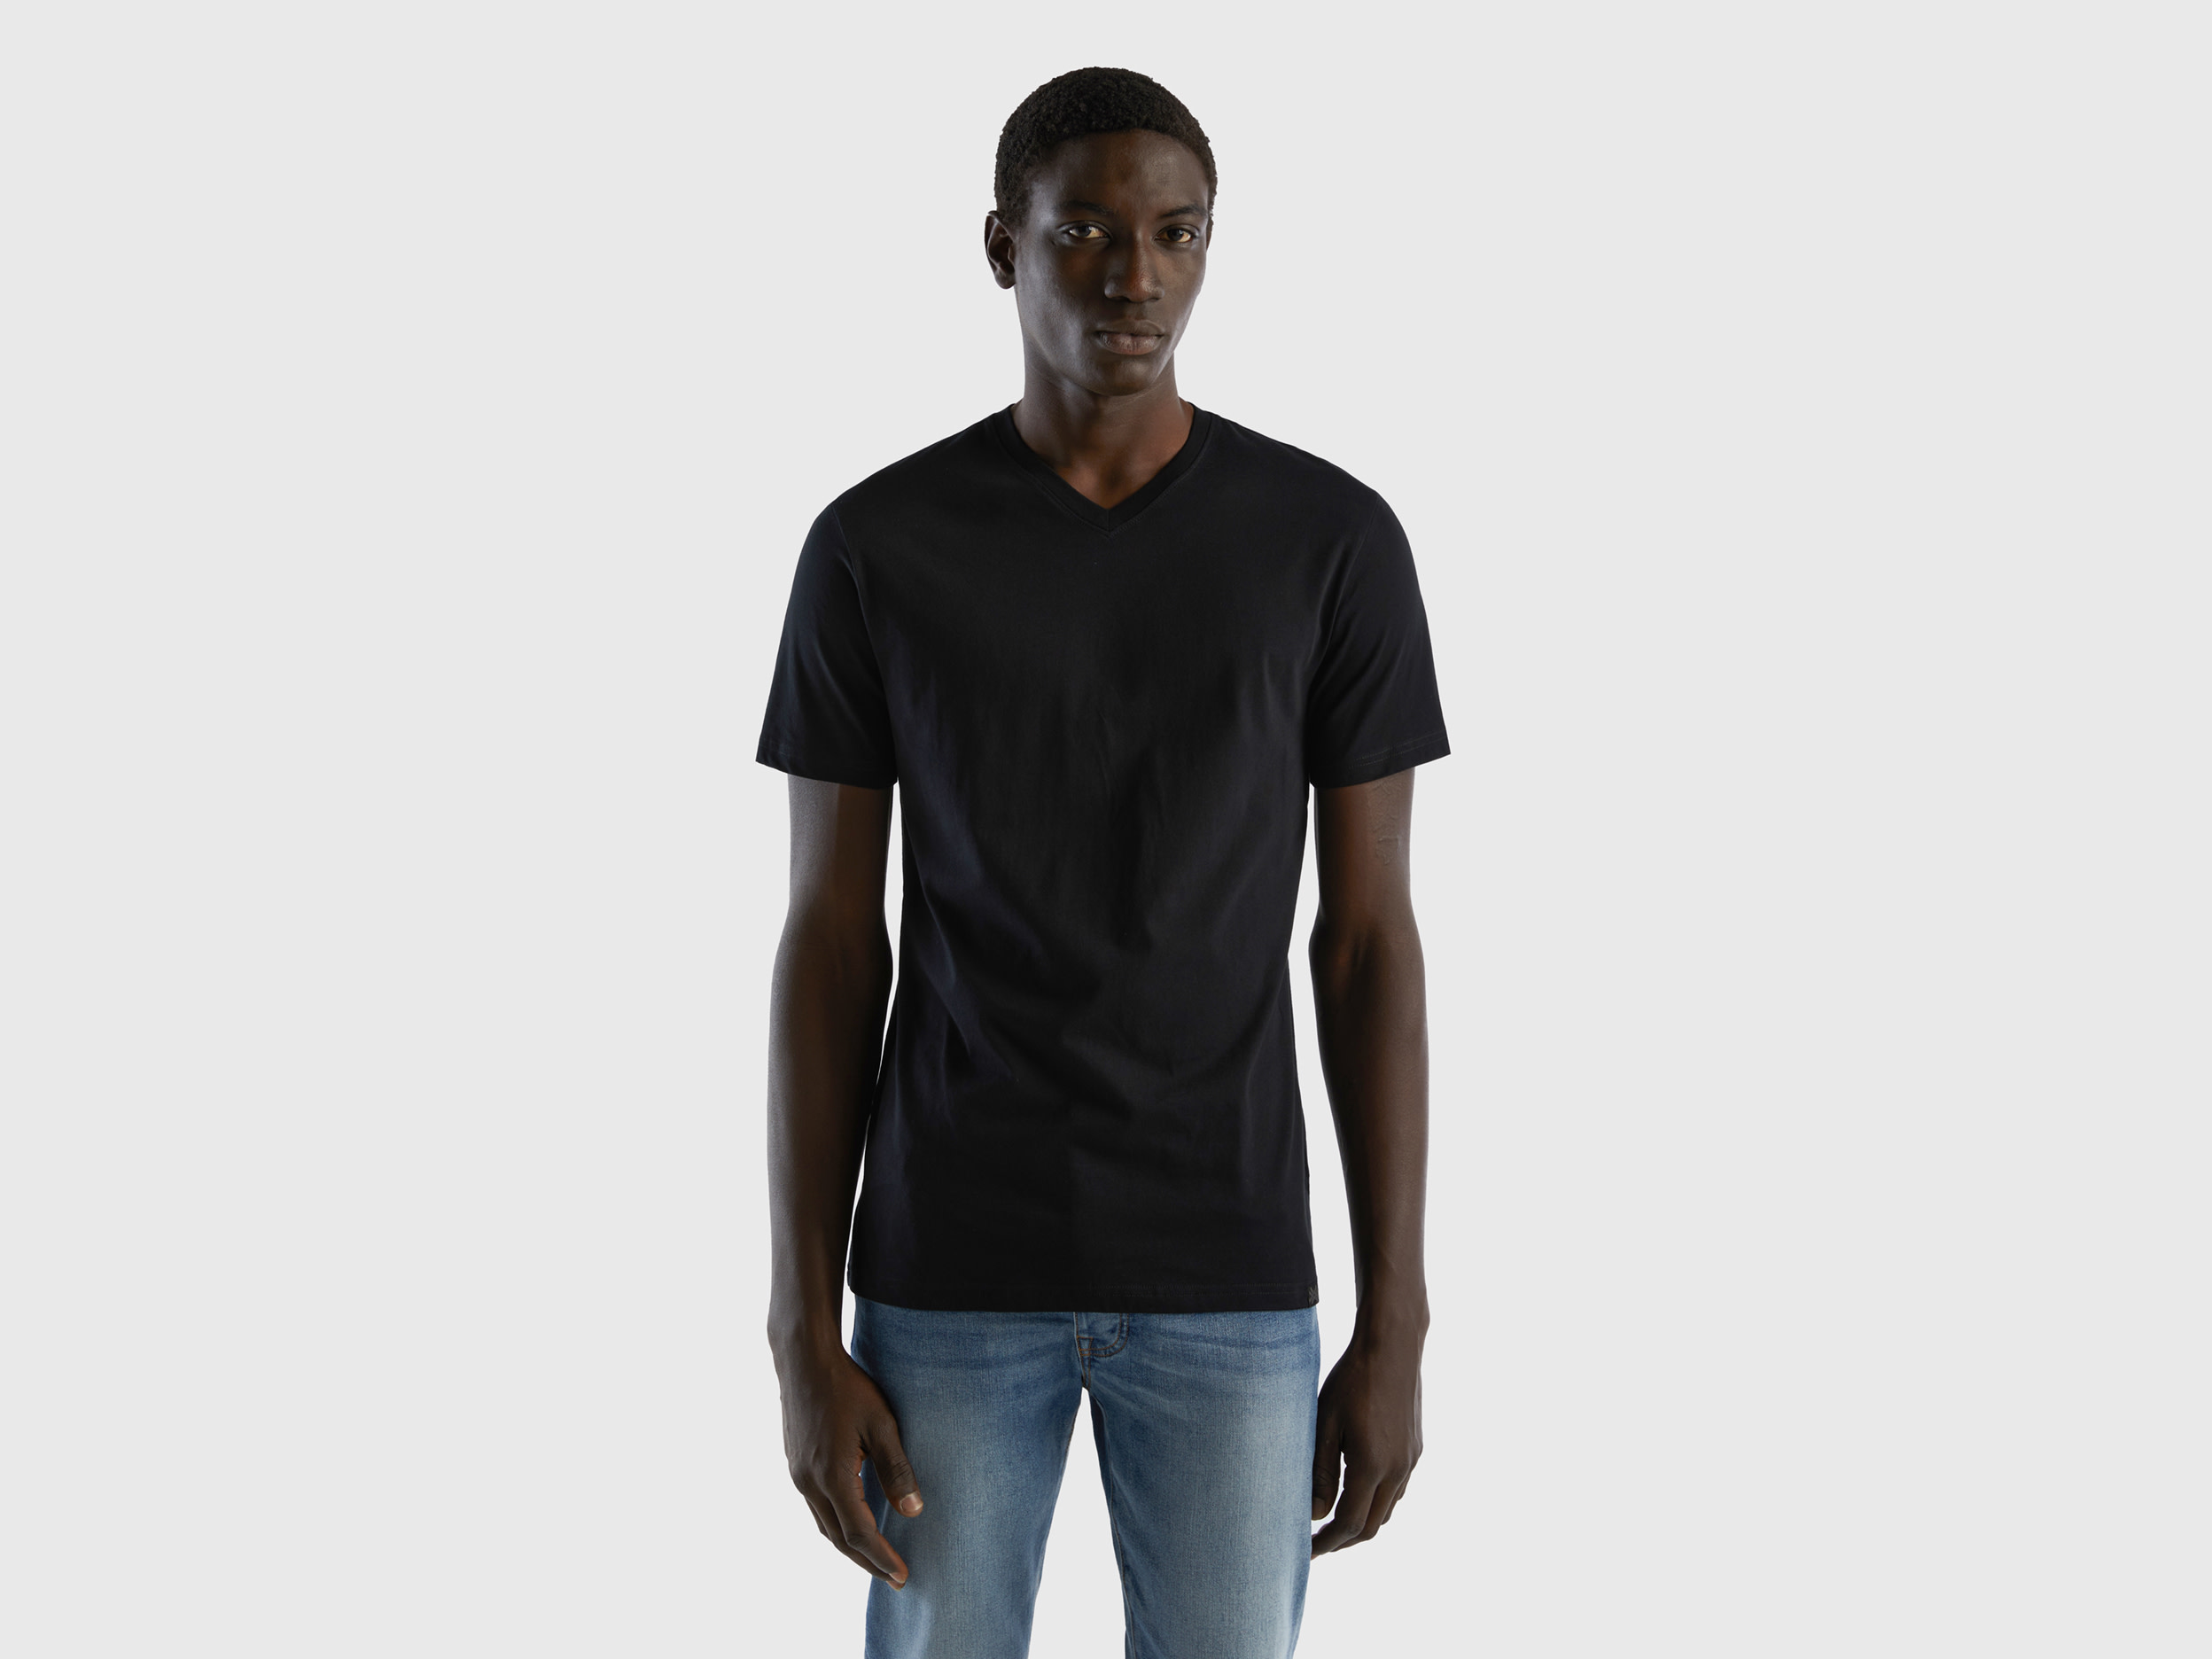 Benetton, T-shirt In Long Fiber Cotton, size XXXL, Black, Men